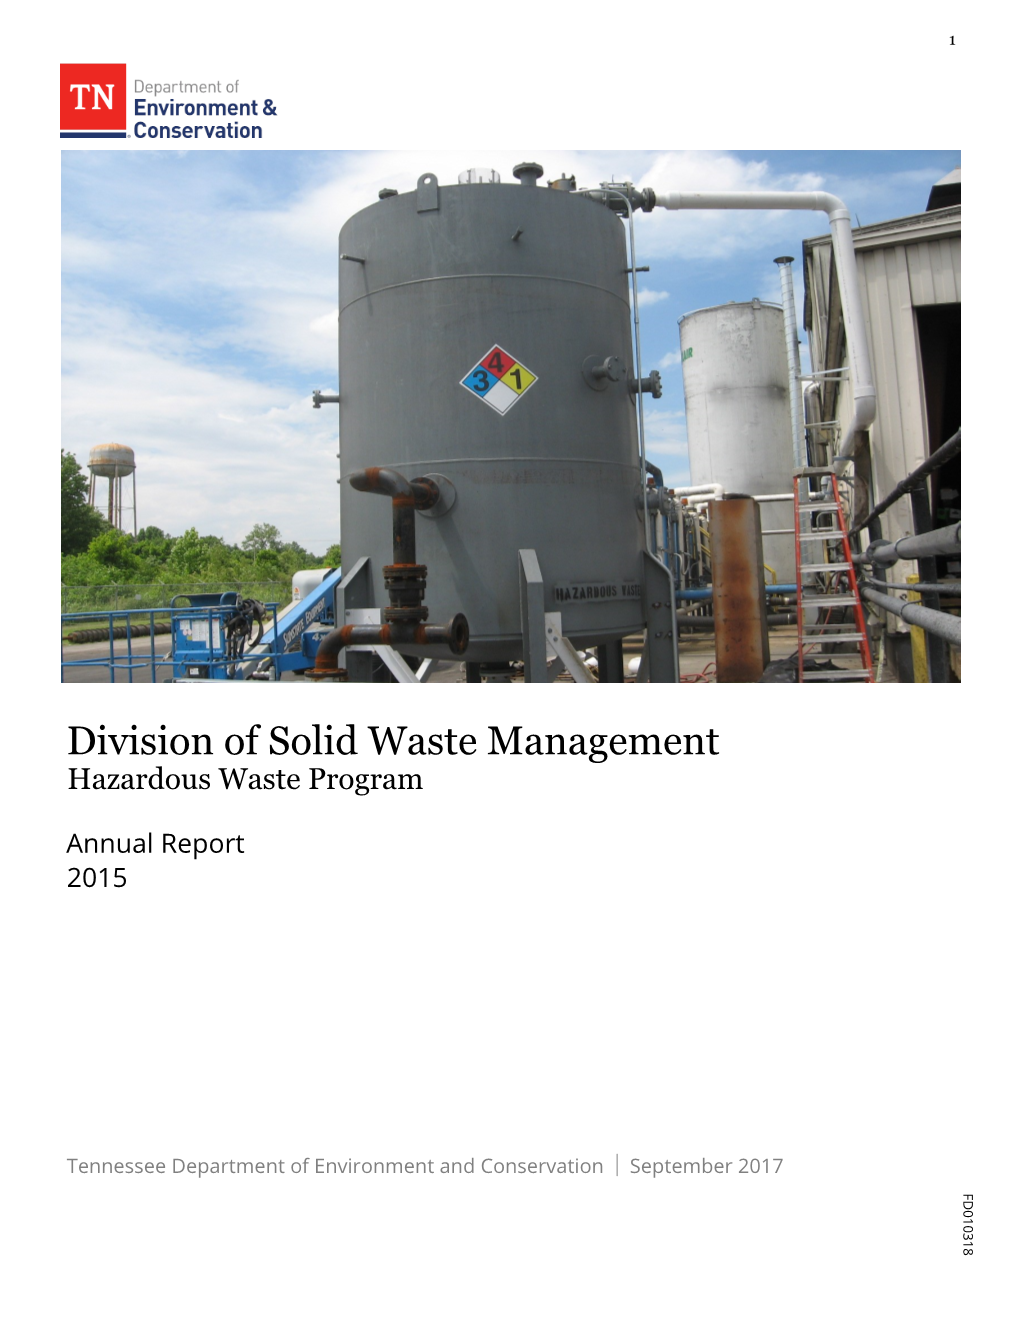 Annual Legislative Report on the Hazardous Waste Regulatory Program for Report Year 2015